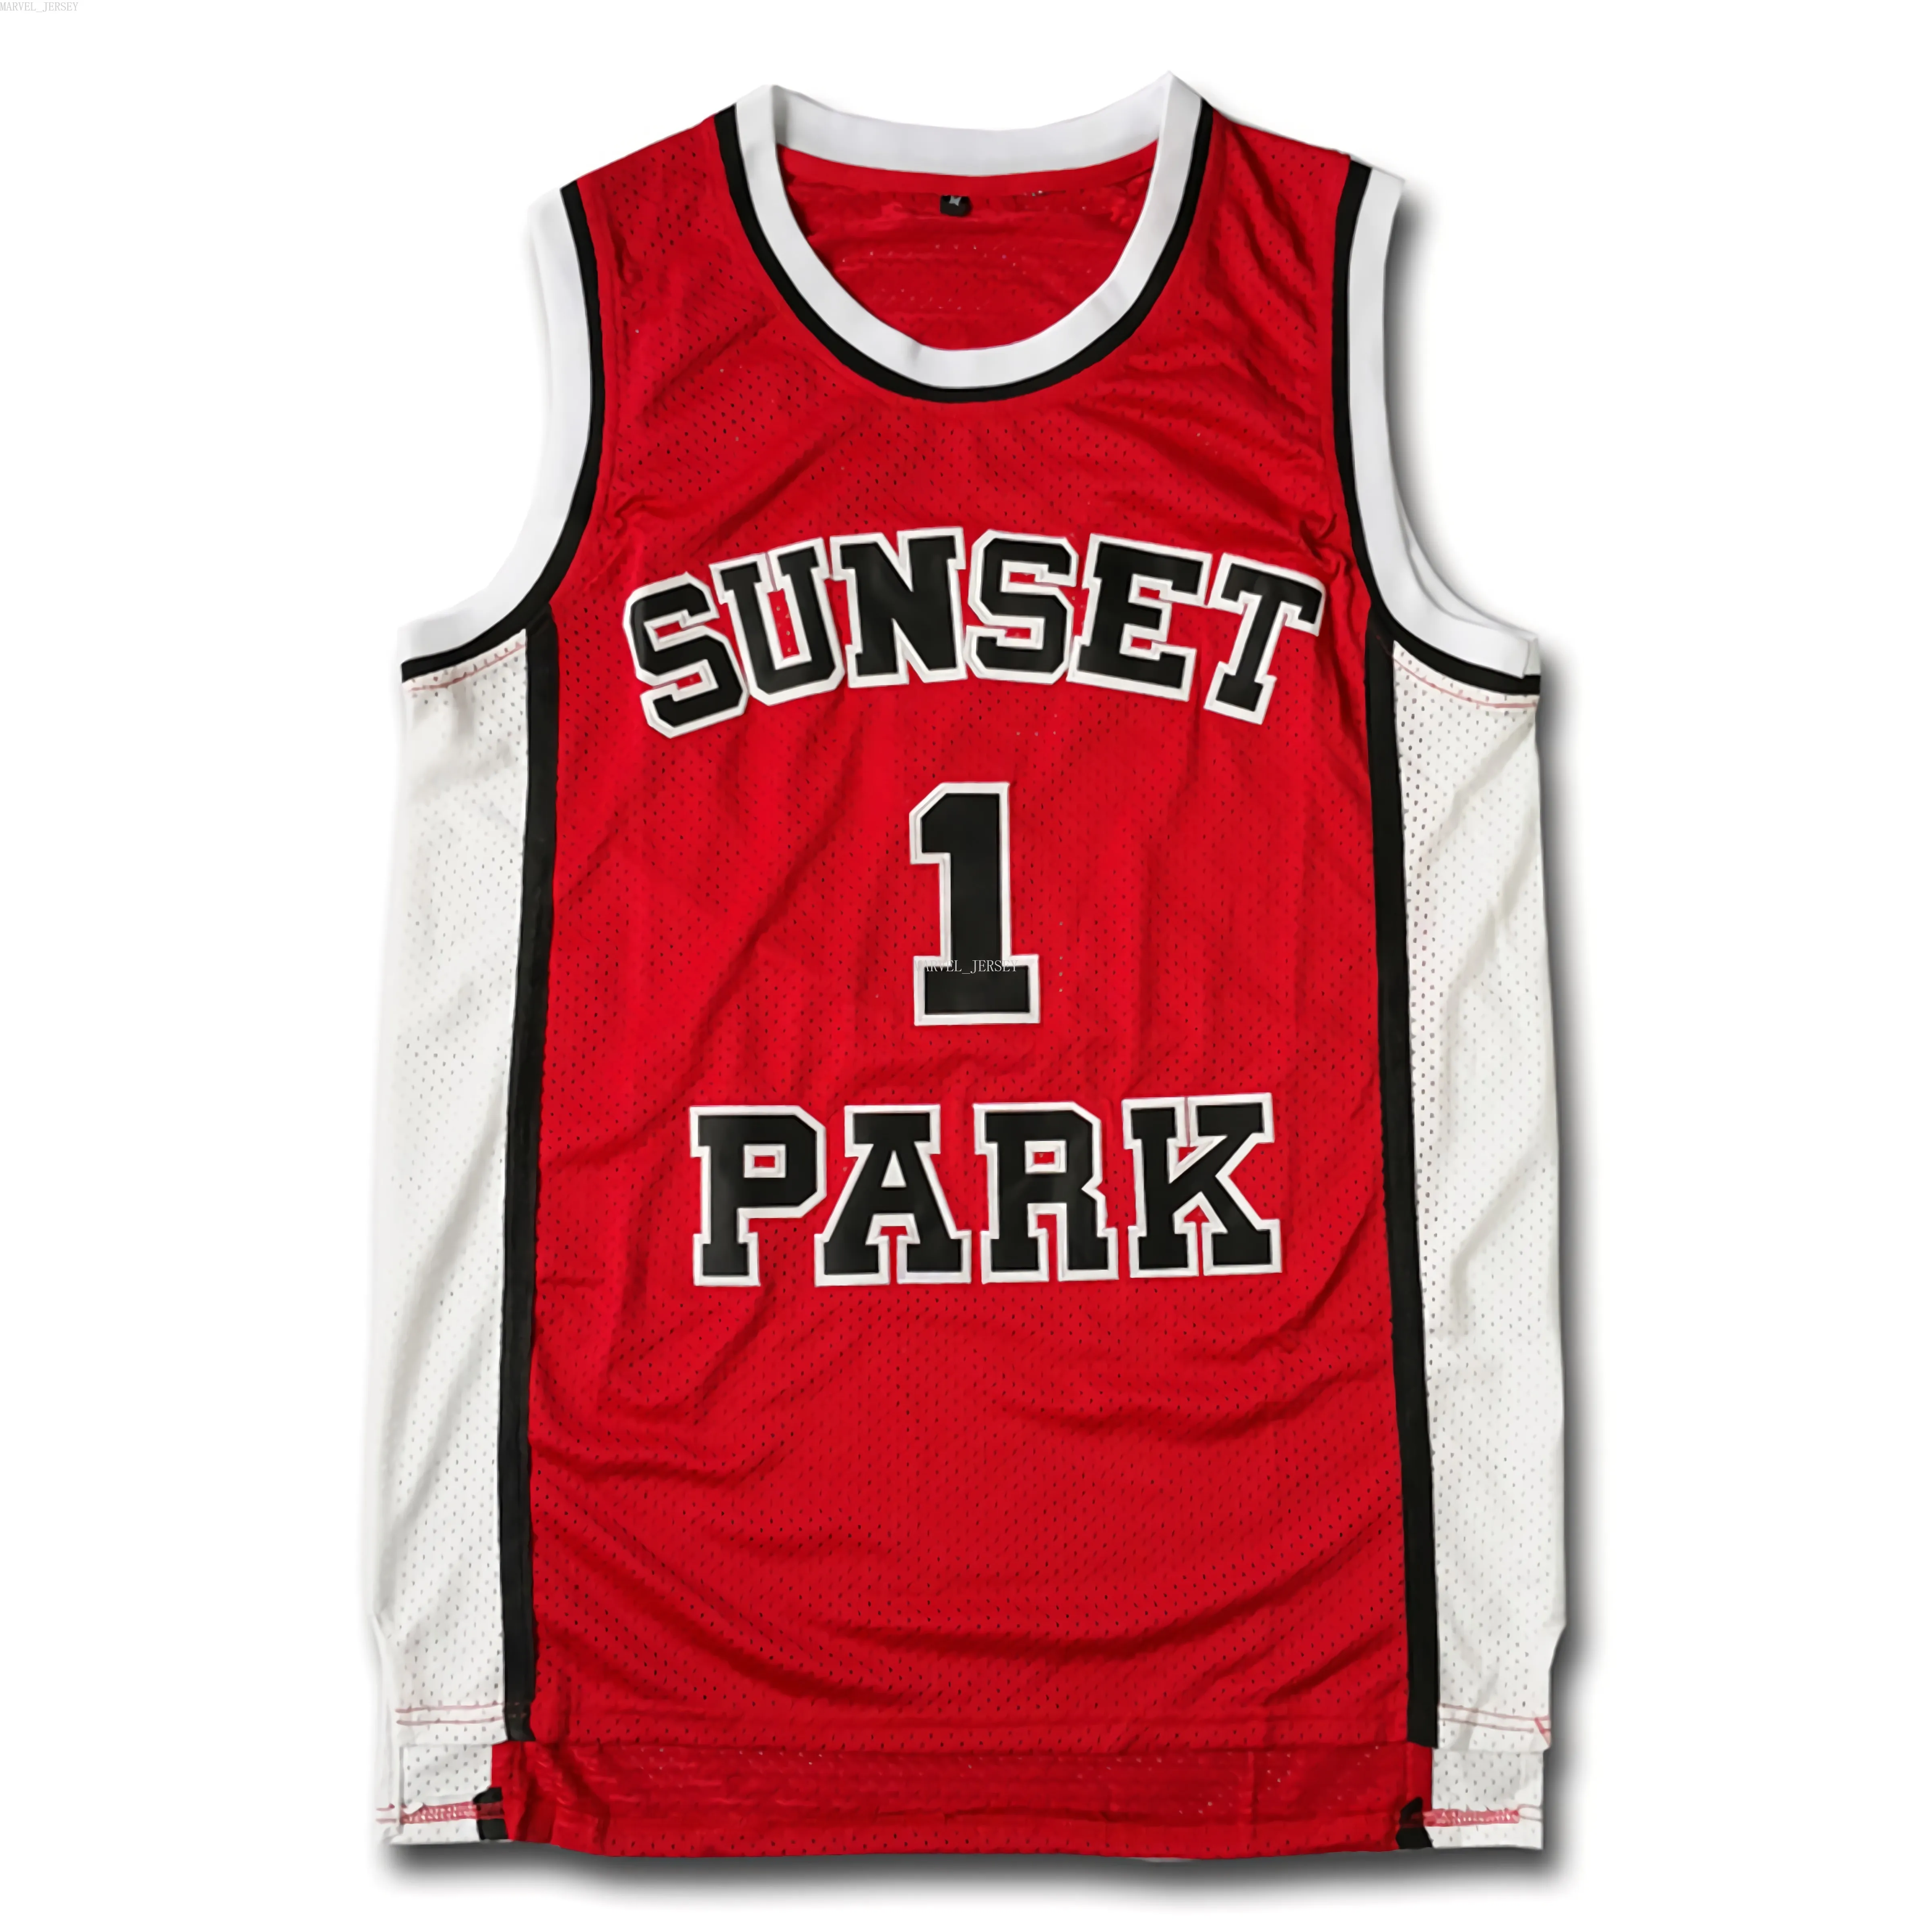 Billiga Custom Fredro Starr Shorty Jersey 1 Sunset Park Moive Red Sewn Basketball Jersey XS-5XL NCAA